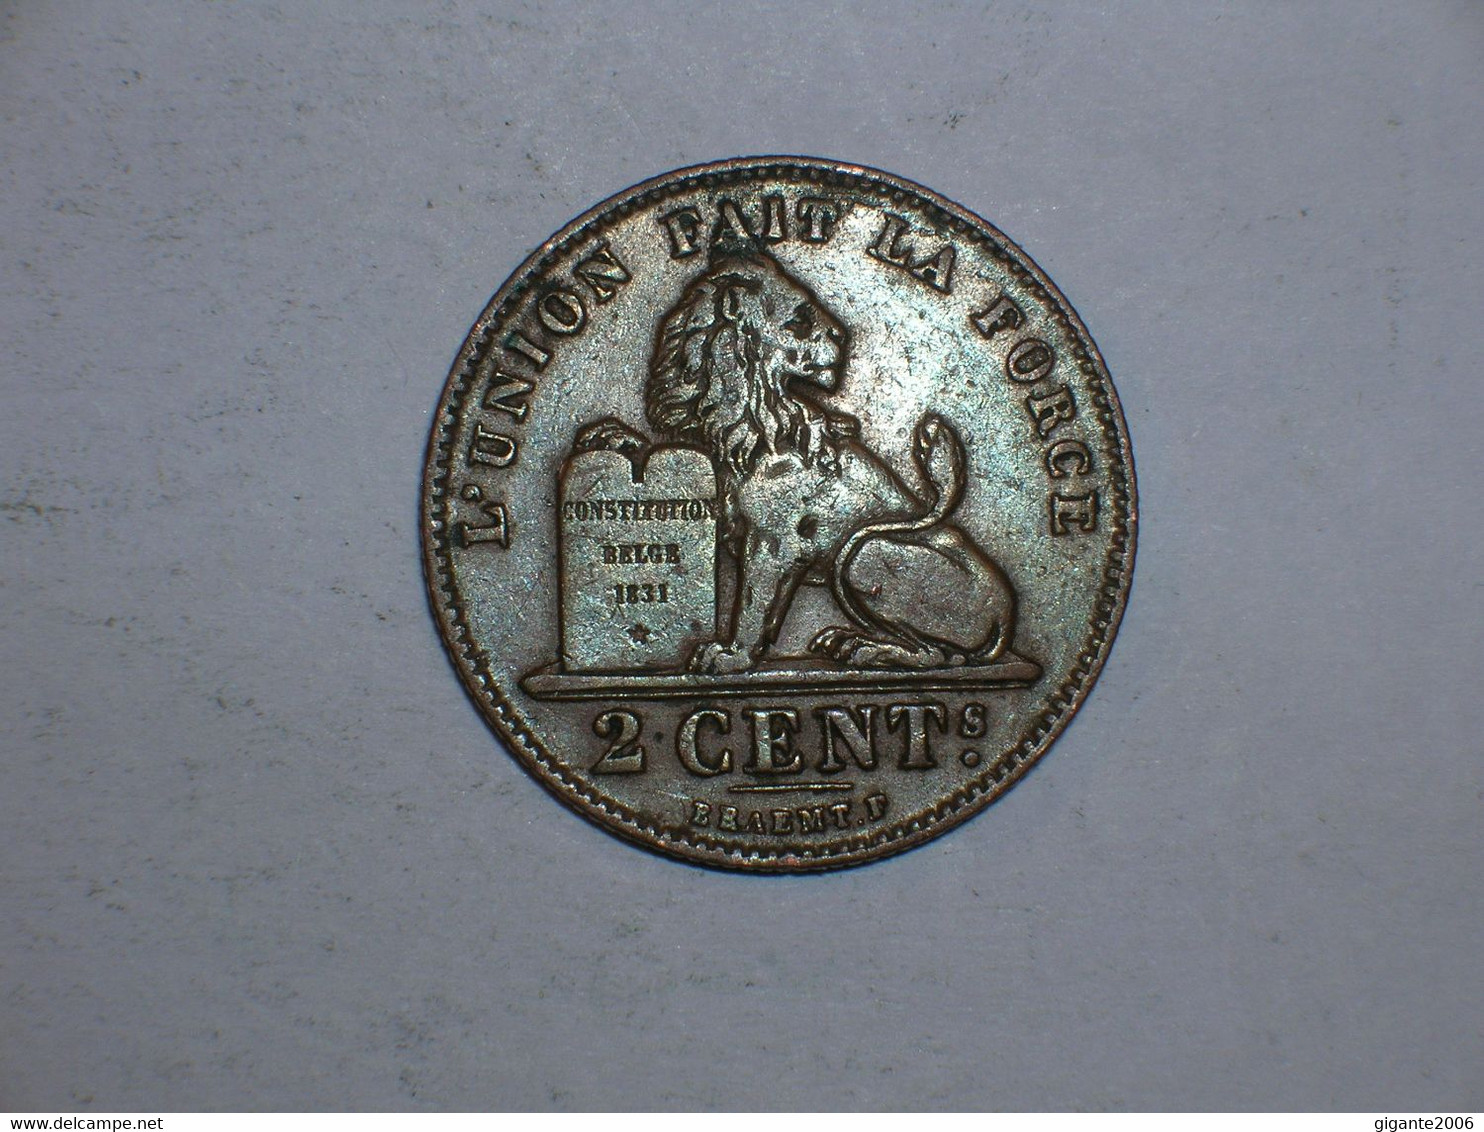 BELGICA 2 CENTIMOS 1912 FR (9235) - 2 Cents